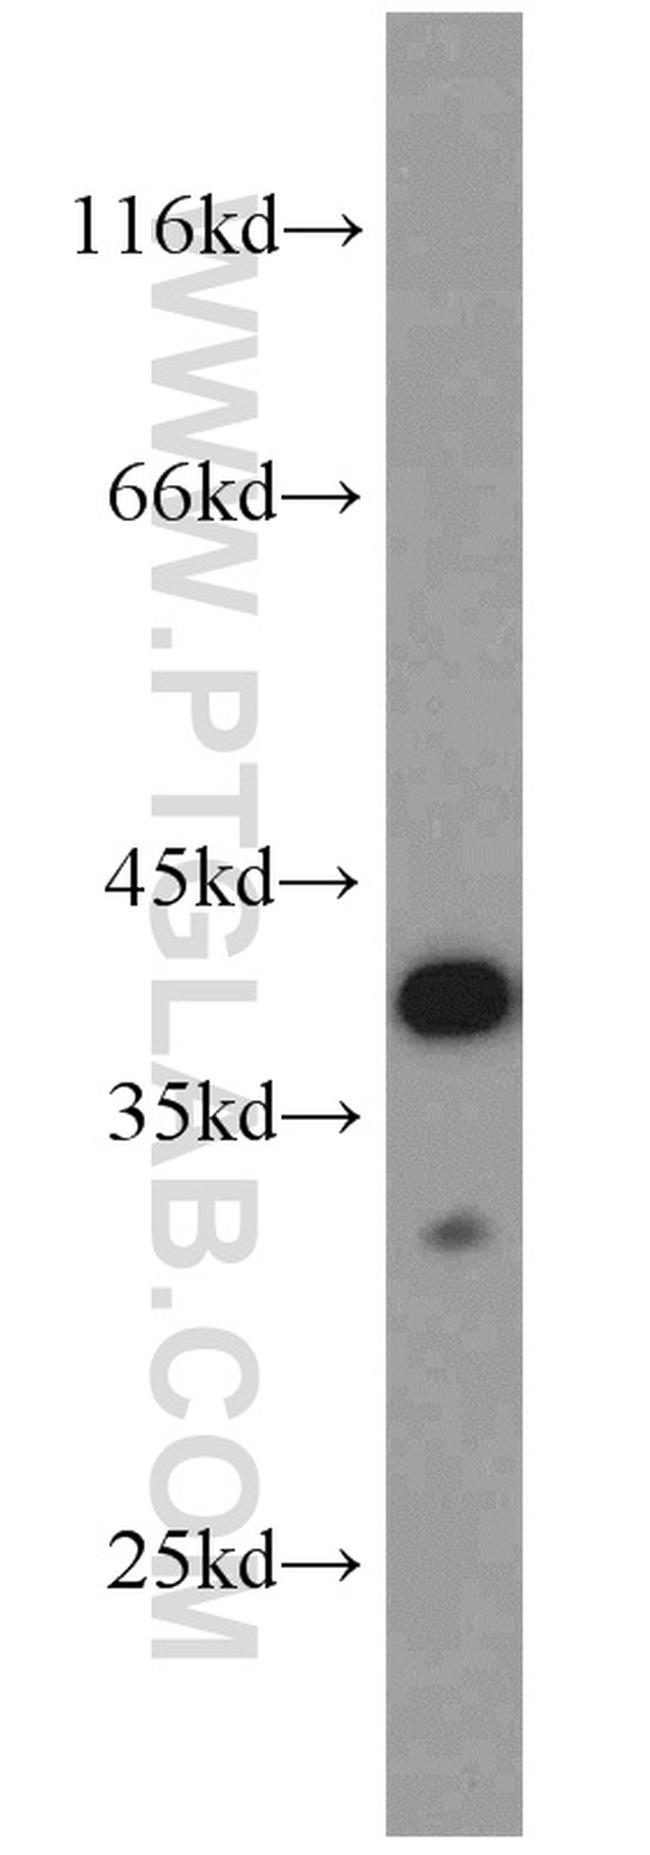 PCNA Antibody in Western Blot (WB)